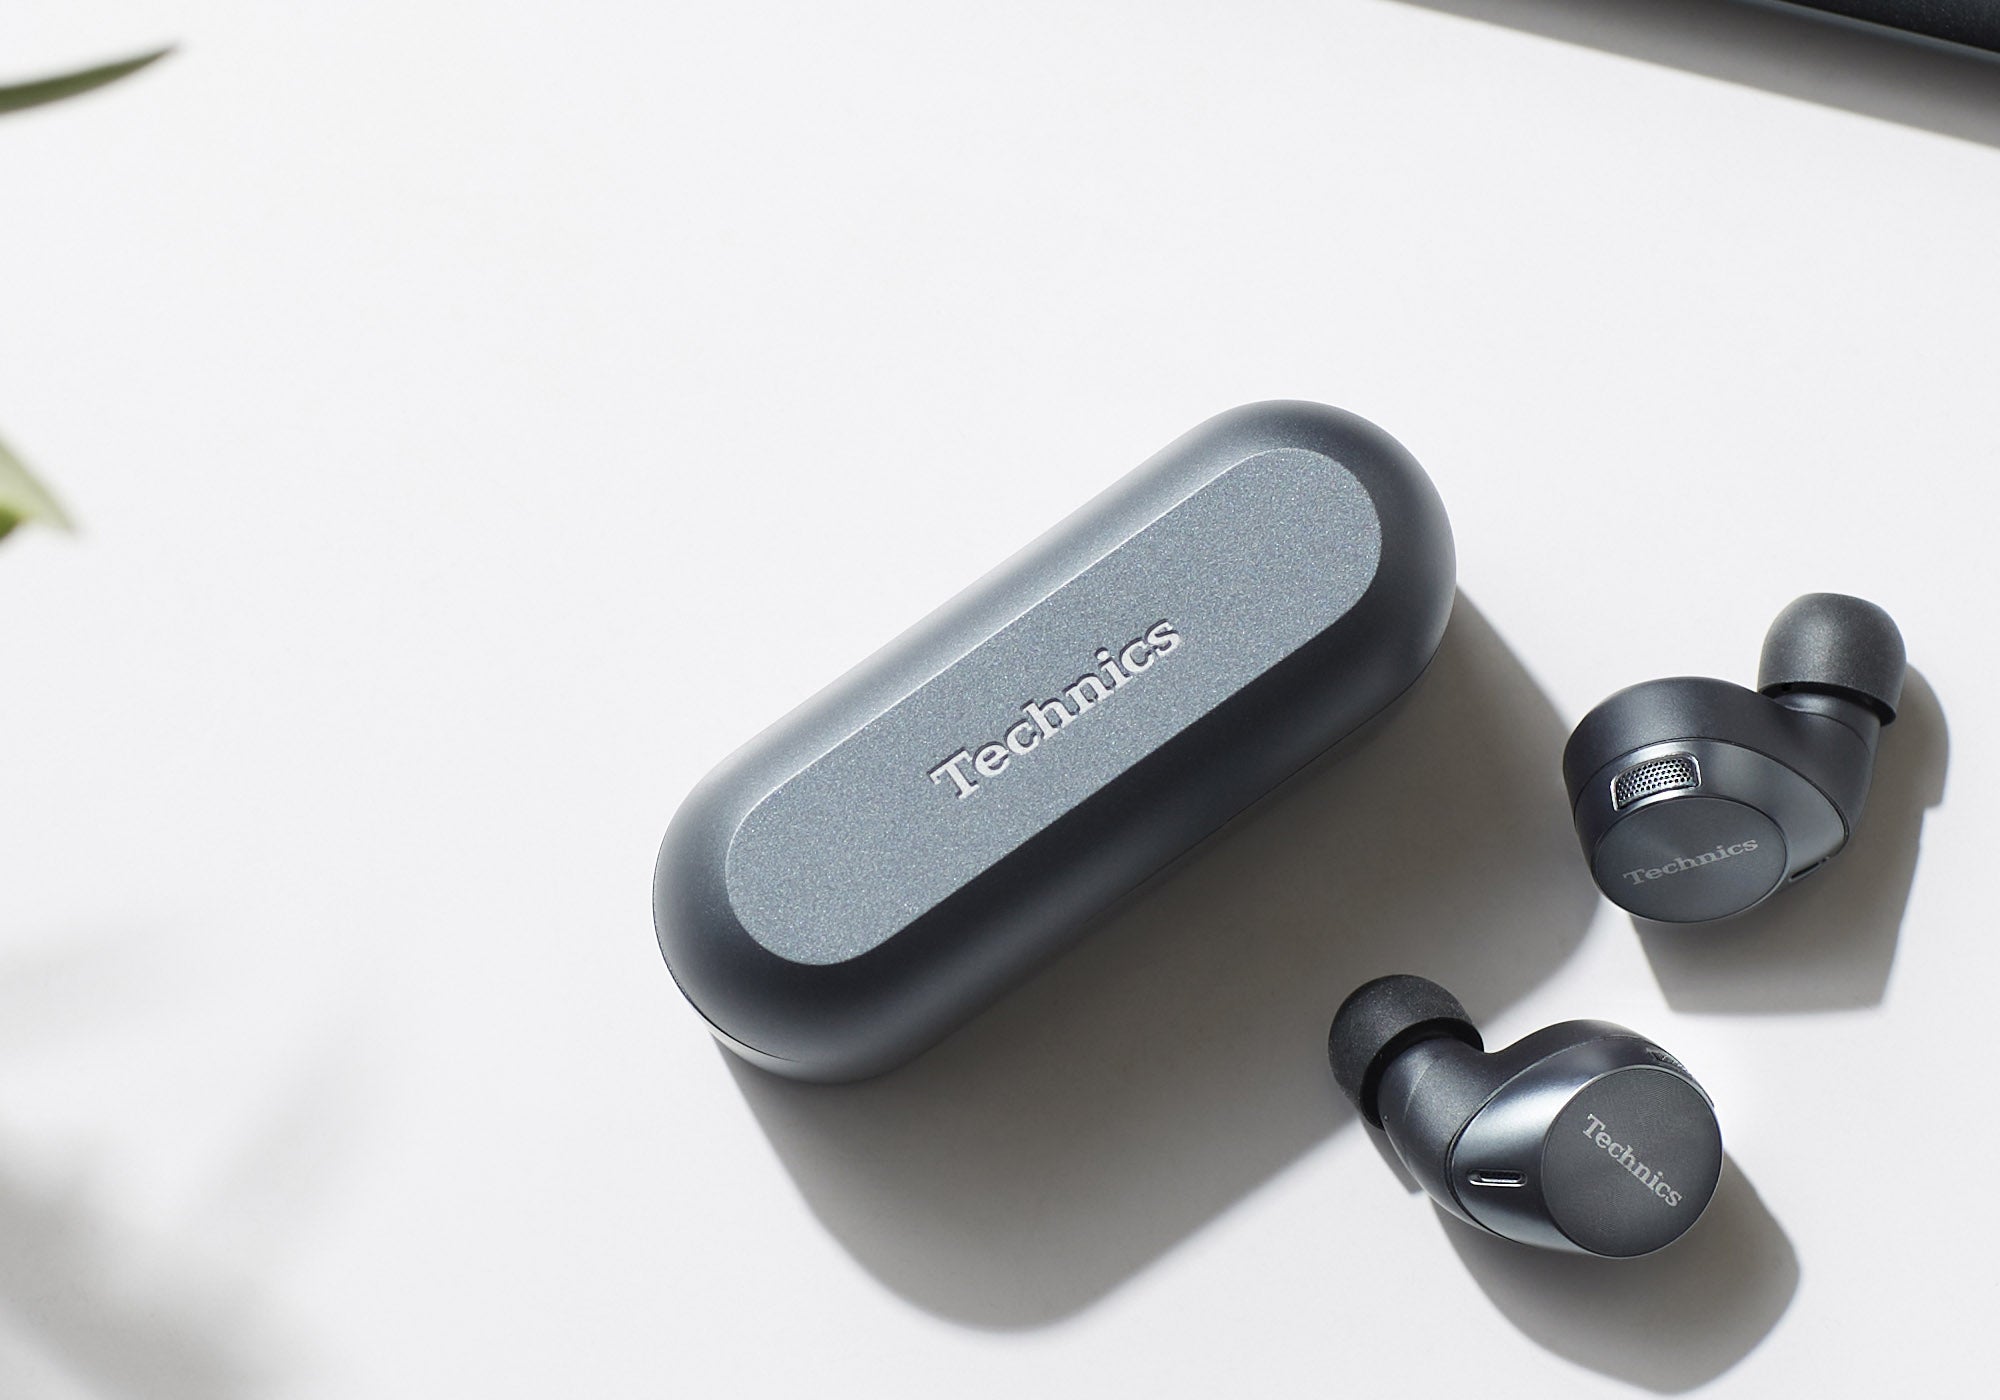 Technics Releases New EAH-AZ60 and EAH-AZ40 True Wireless Headphones Designed with Superior Sound